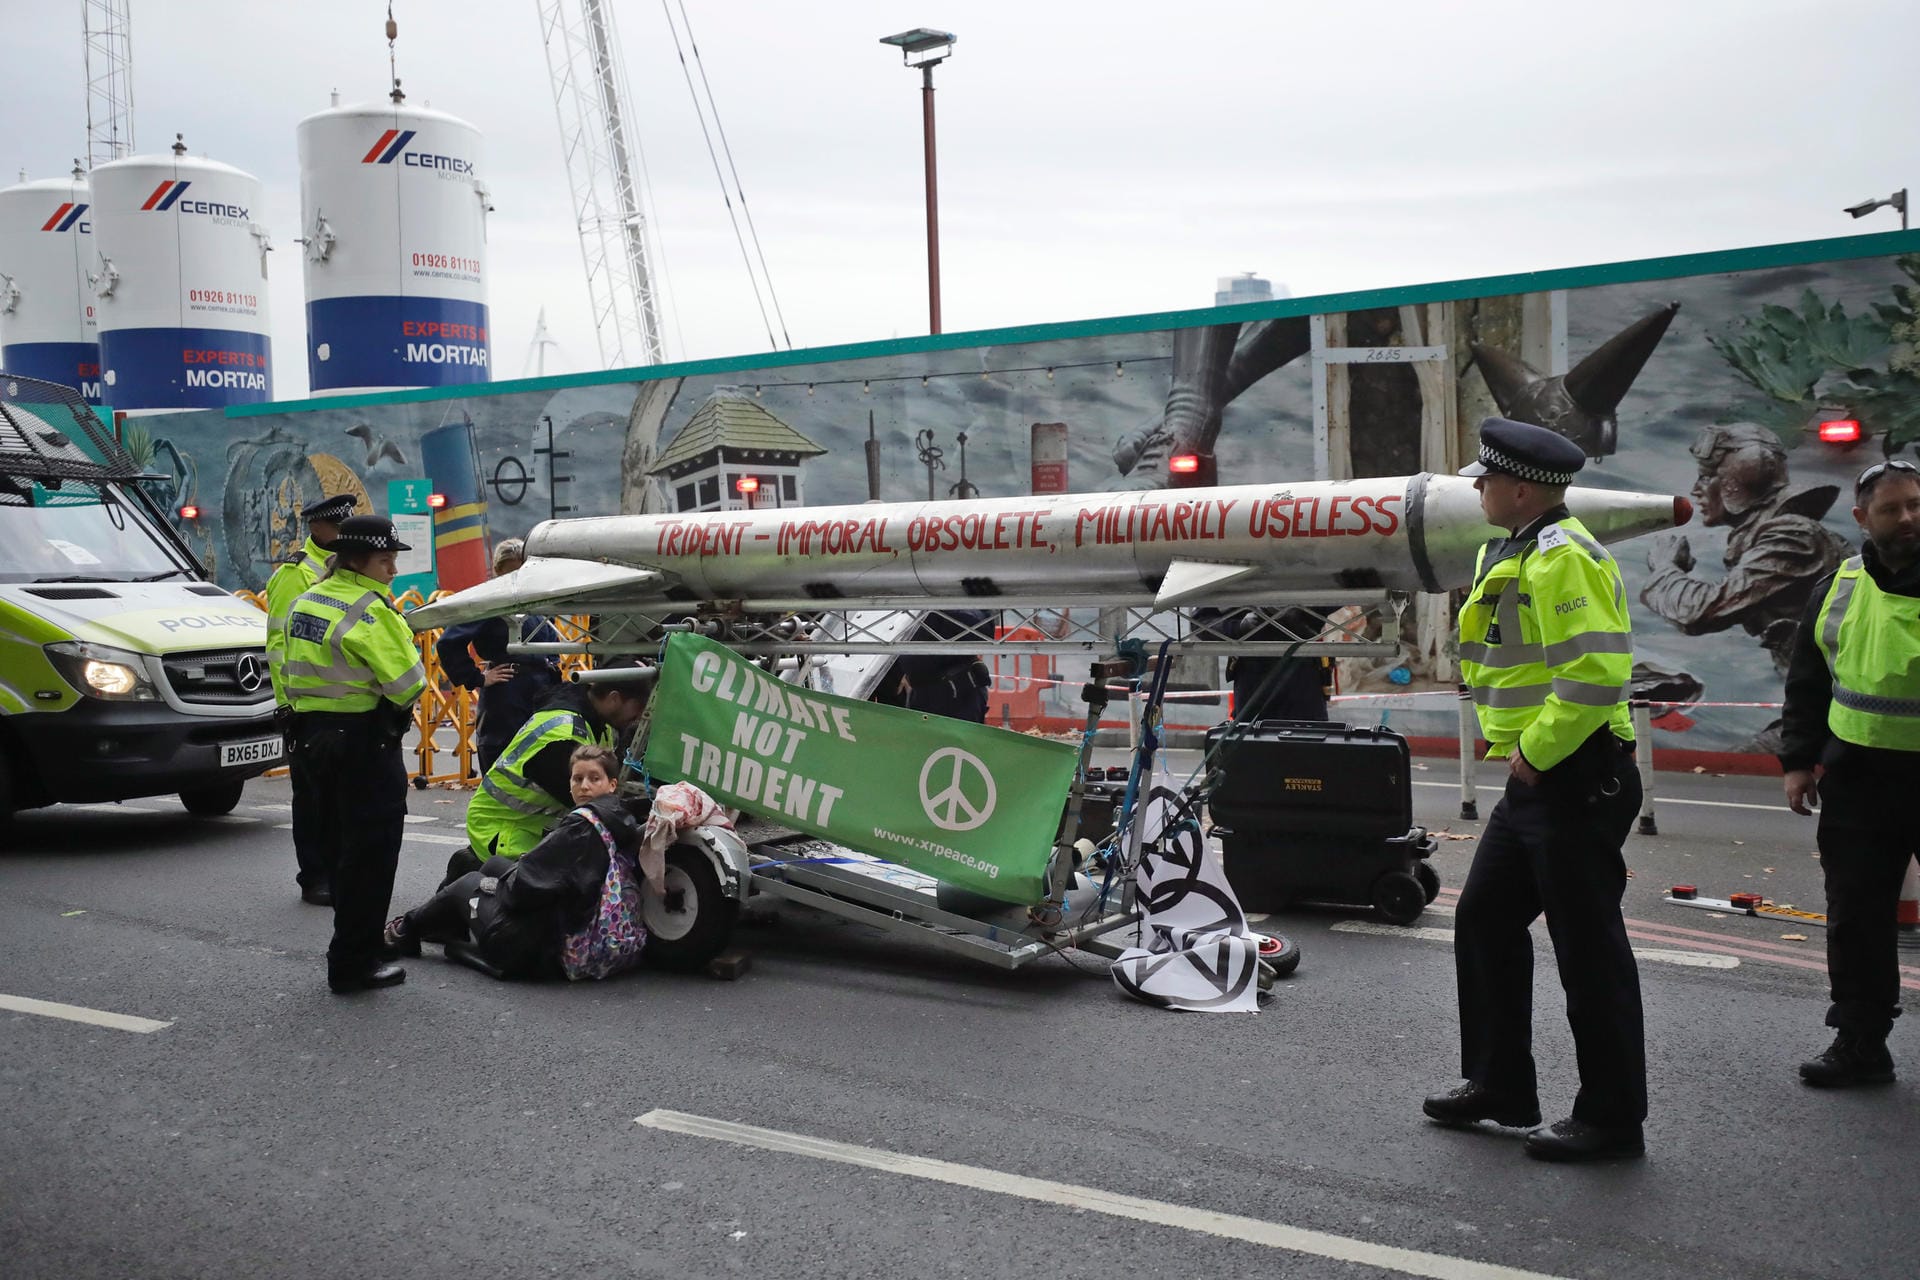 Protest mit Trident-Attrappe: Extinction Rebellion protestiert in London.